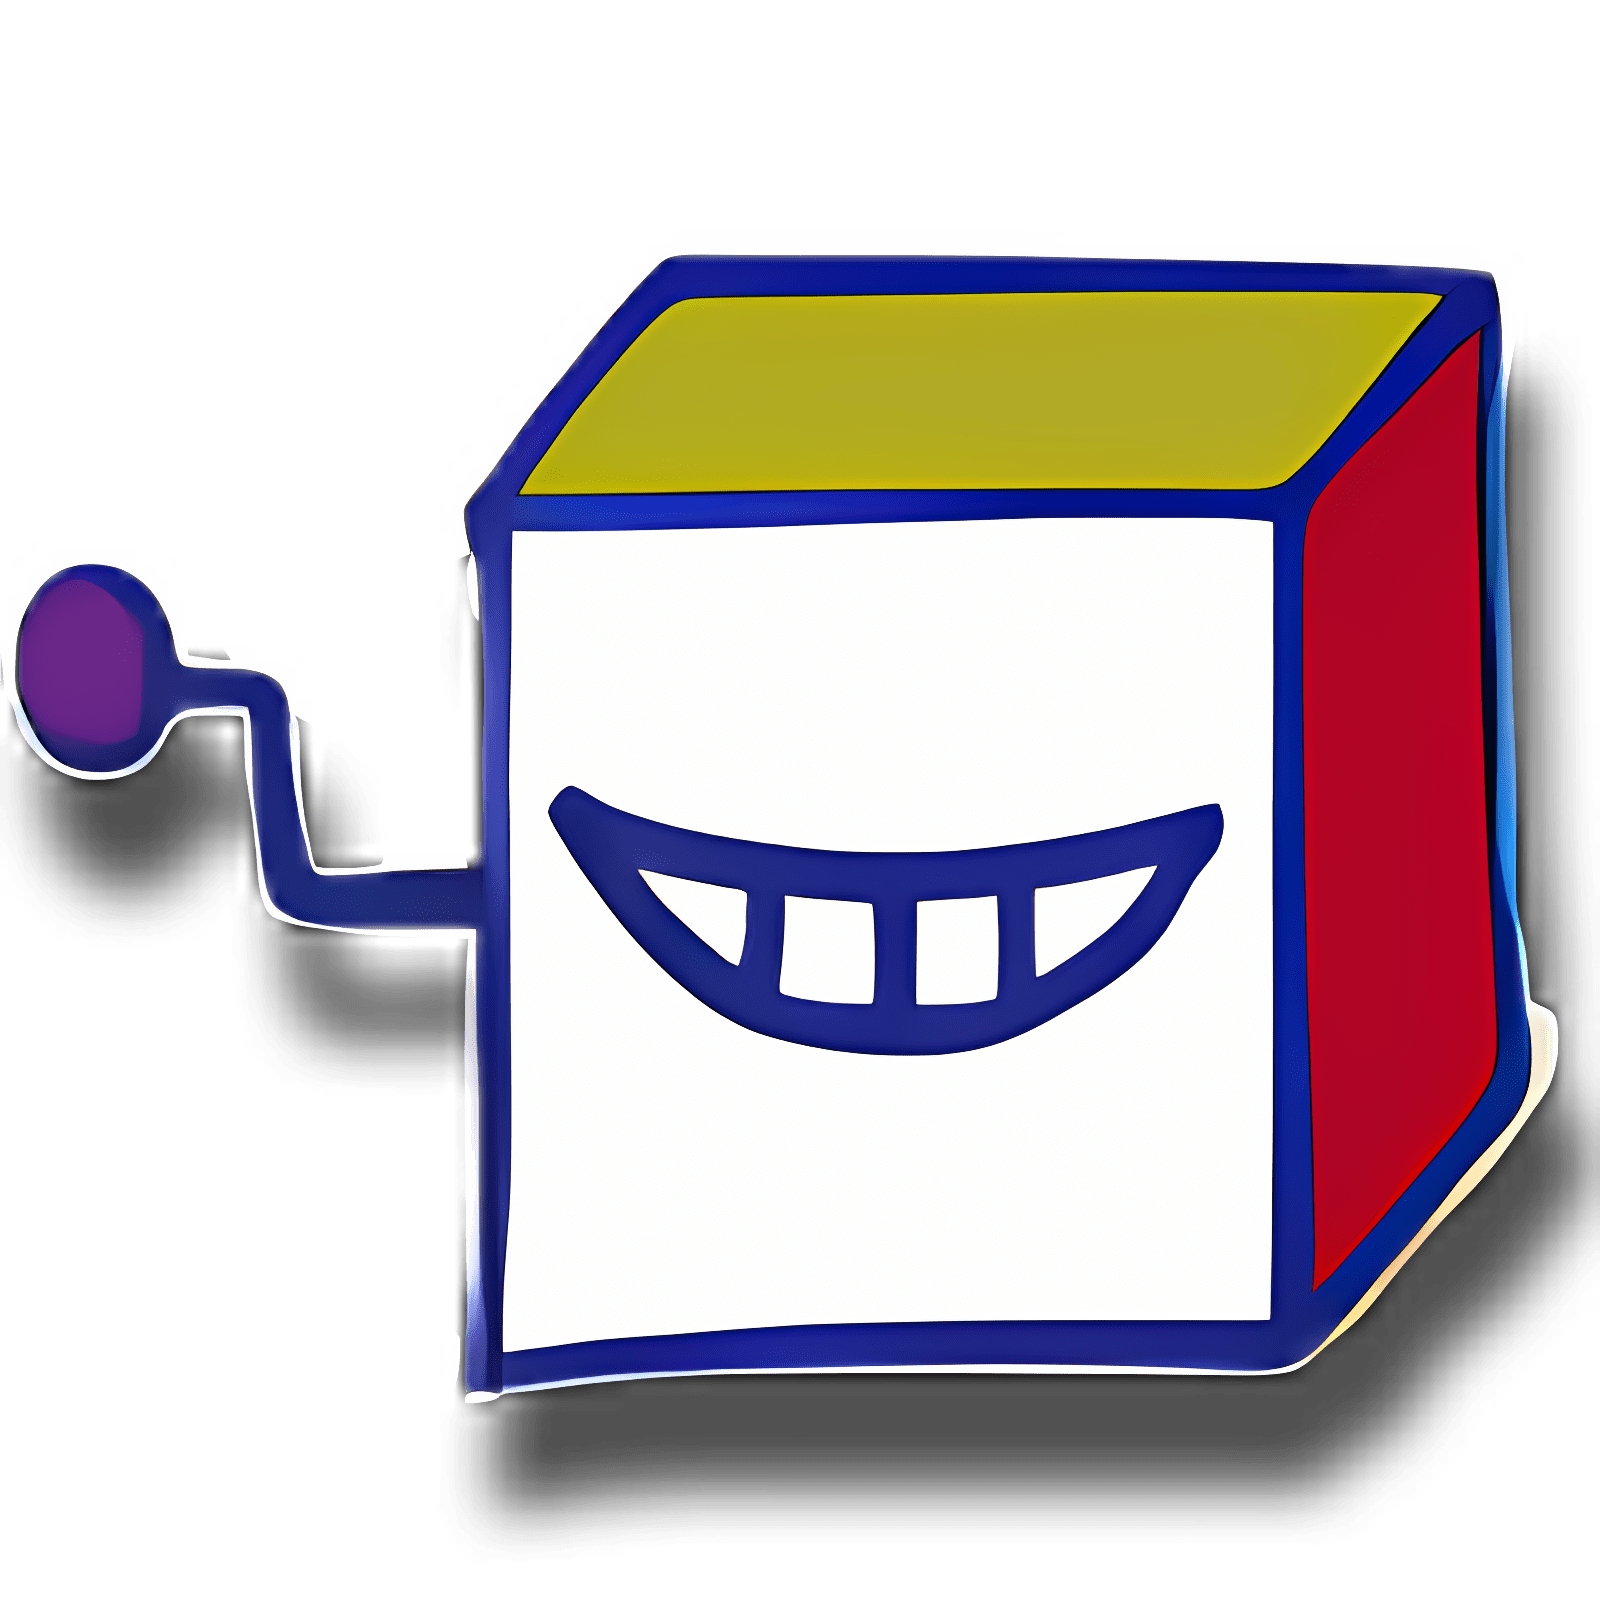 smilebox logo